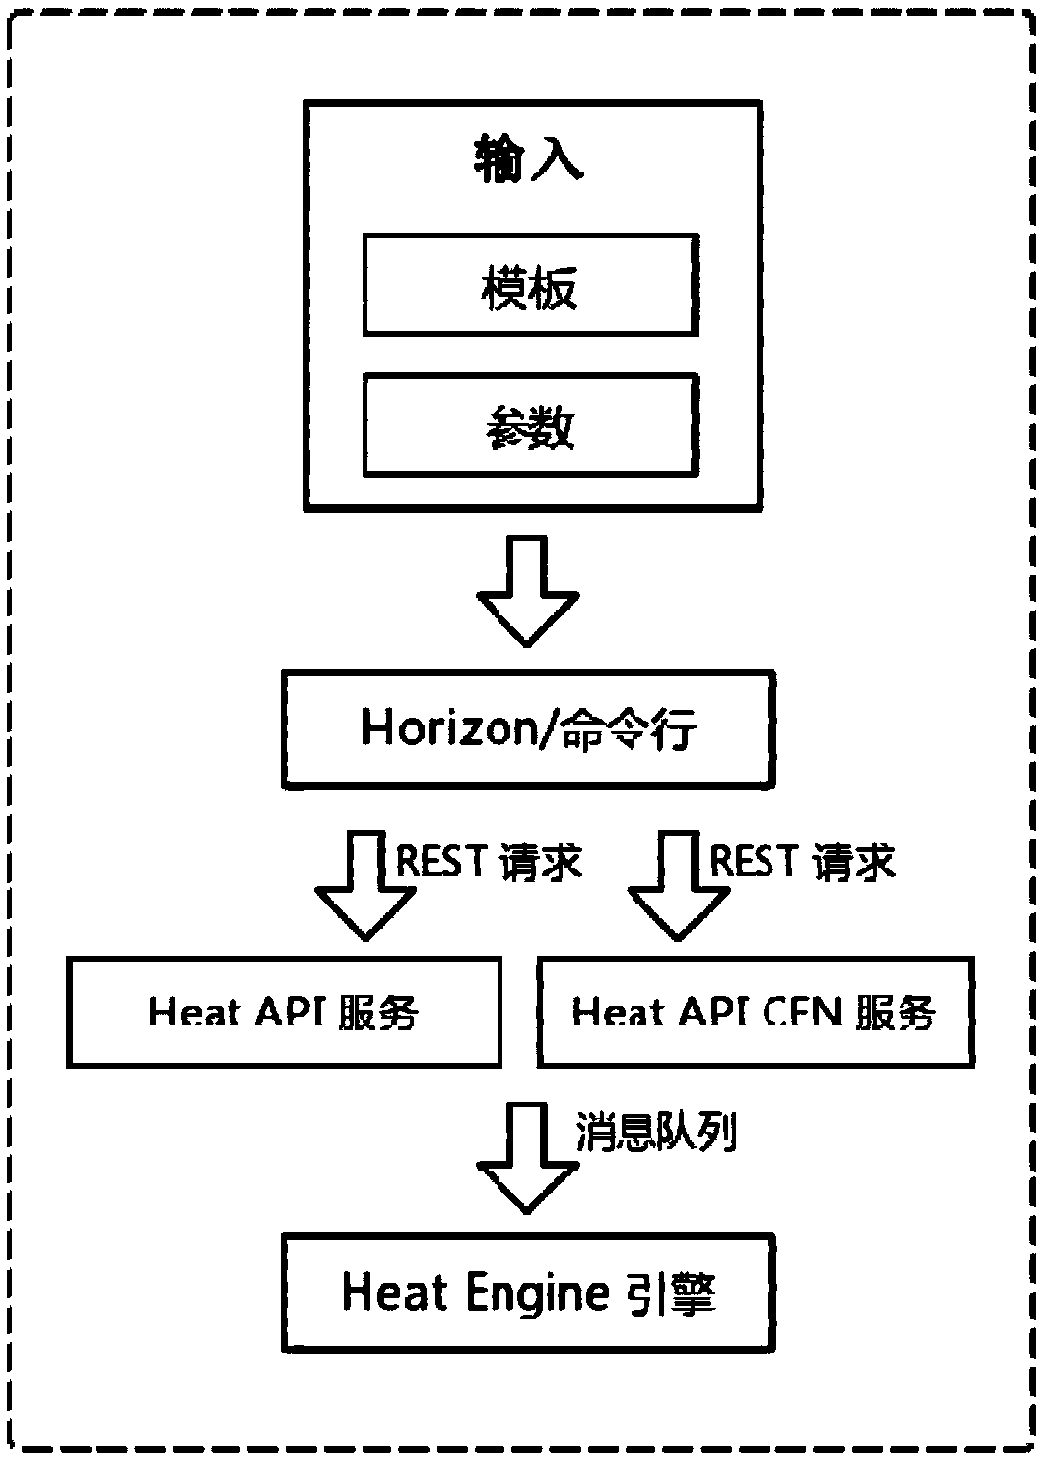 Visualization arrangement method for resources in OpenStack cloud platform